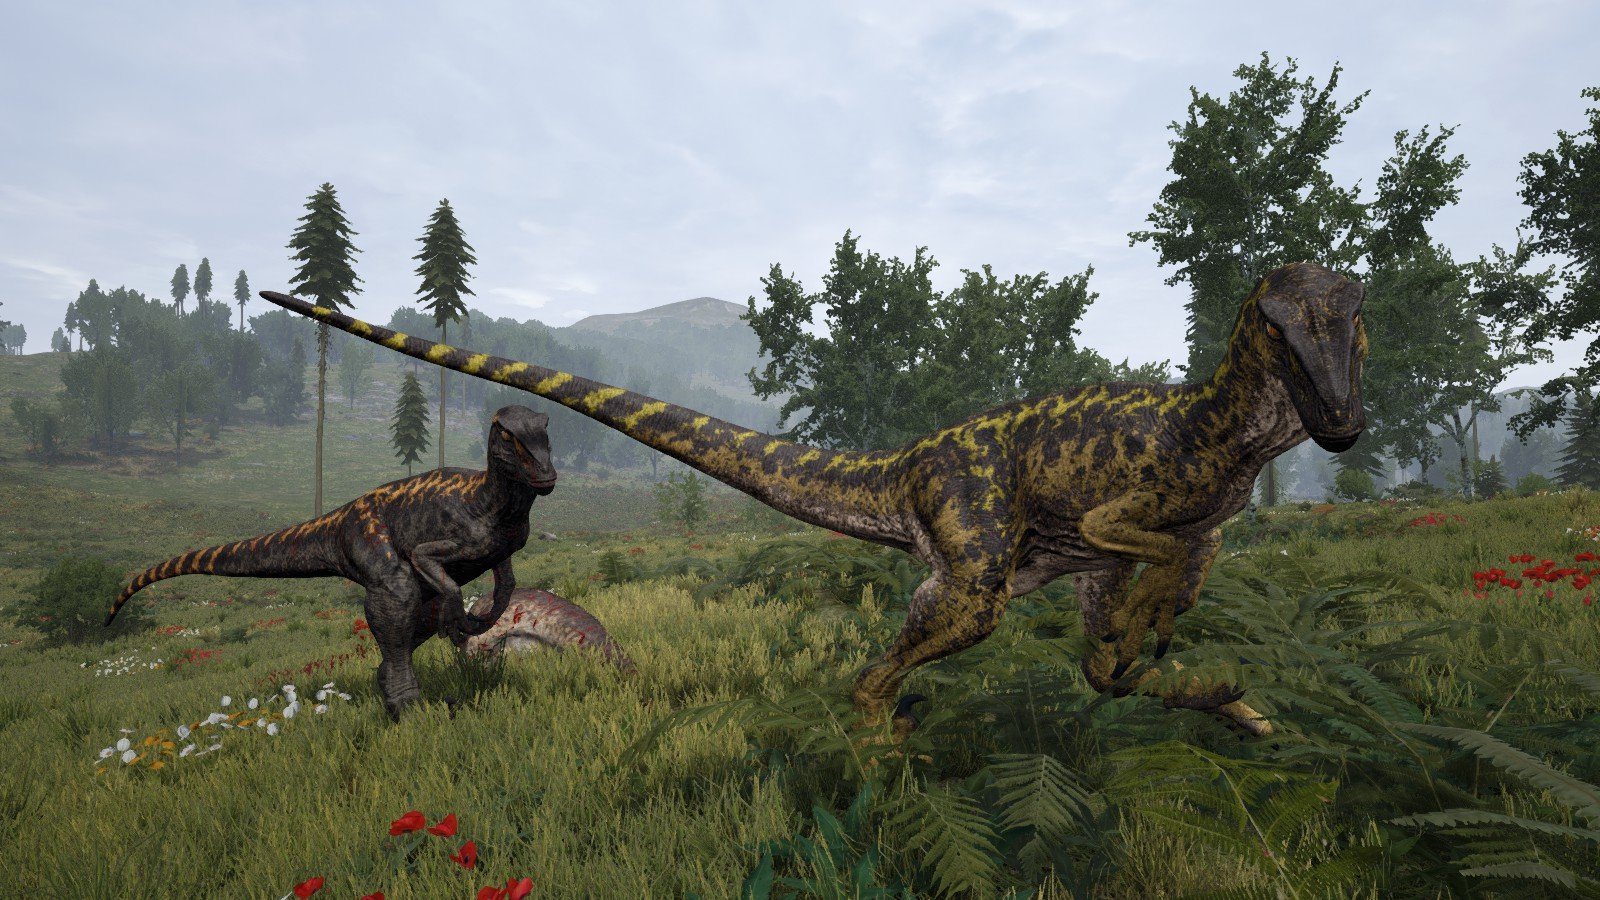 Two black and orange dinosaurs in the field, alongside a deceased dinosaur